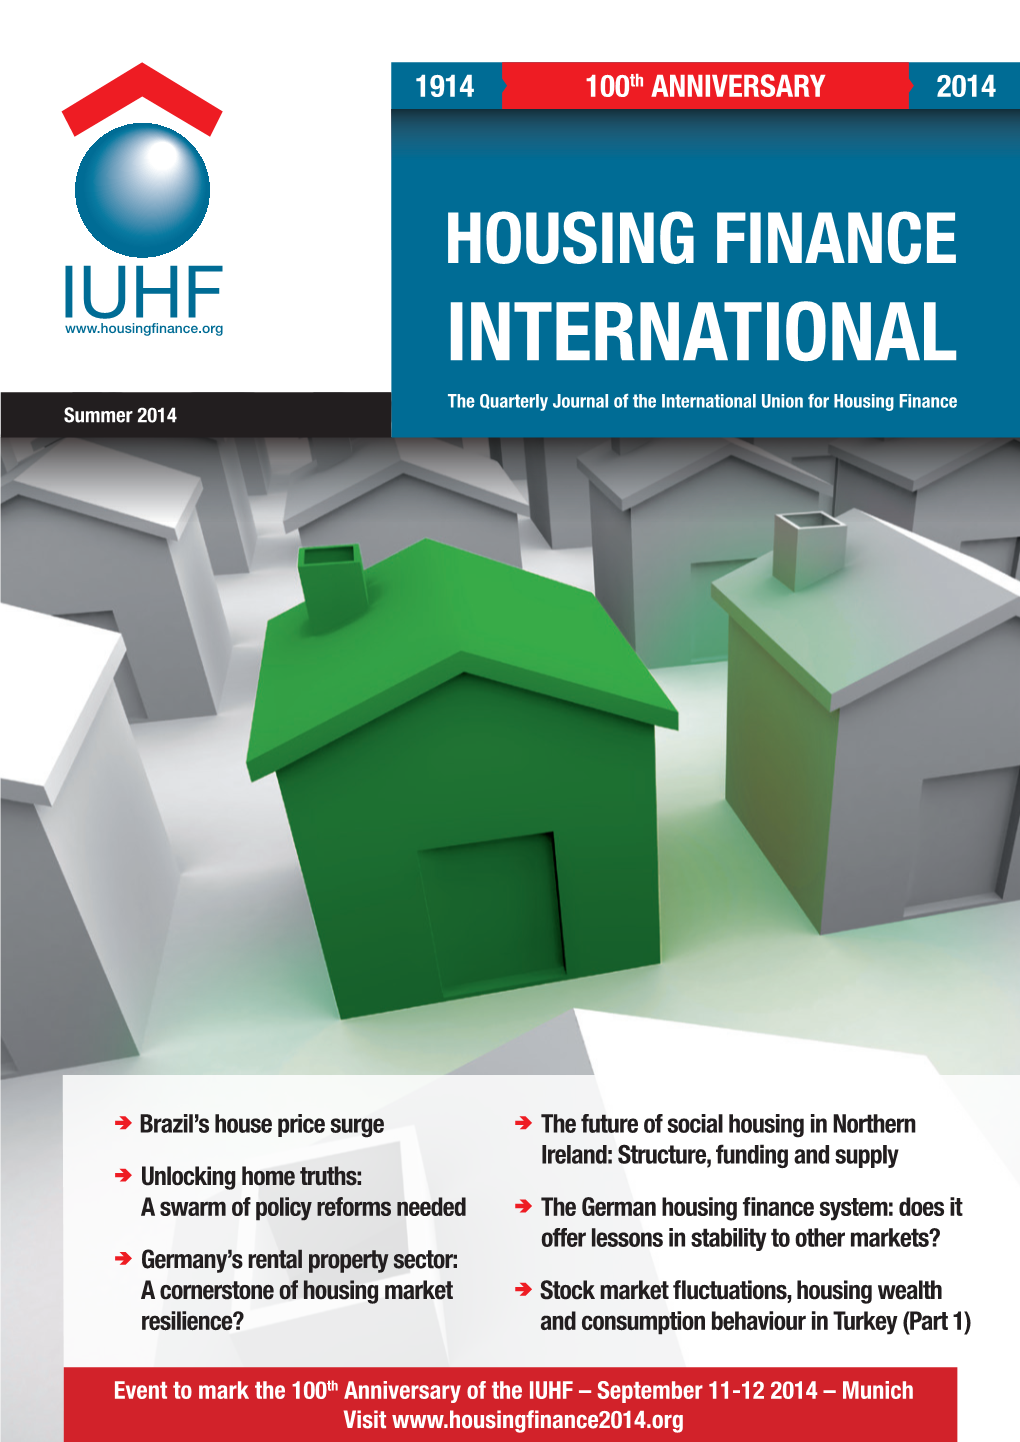 HOUSING FINANCE INTERNATIONAL the Quarterly Journal of the International Union for Housing Finance Summer 2014